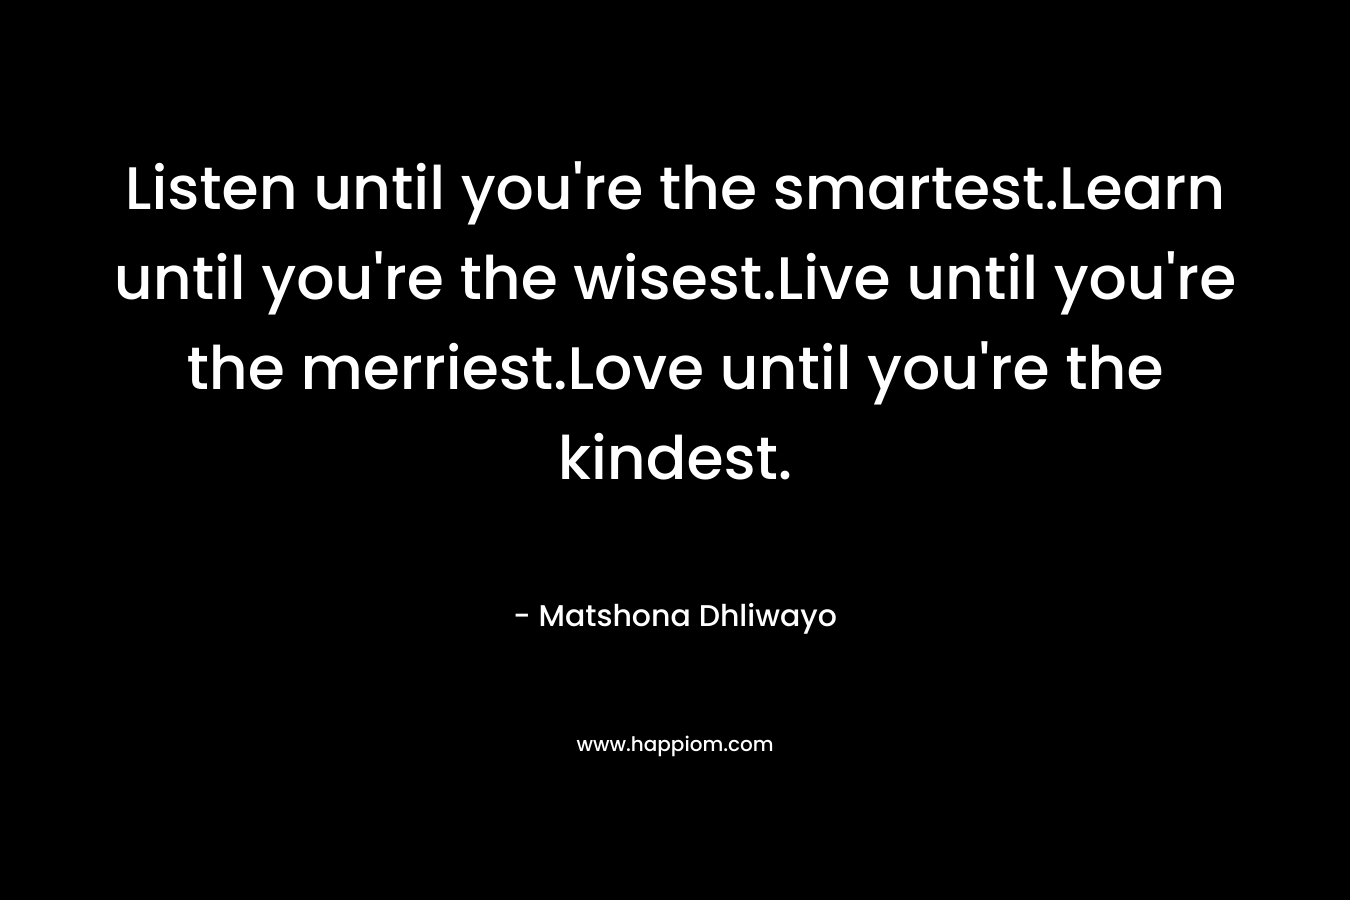 Listen until you're the smartest.Learn until you're the wisest.Live until you're the merriest.Love until you're the kindest.